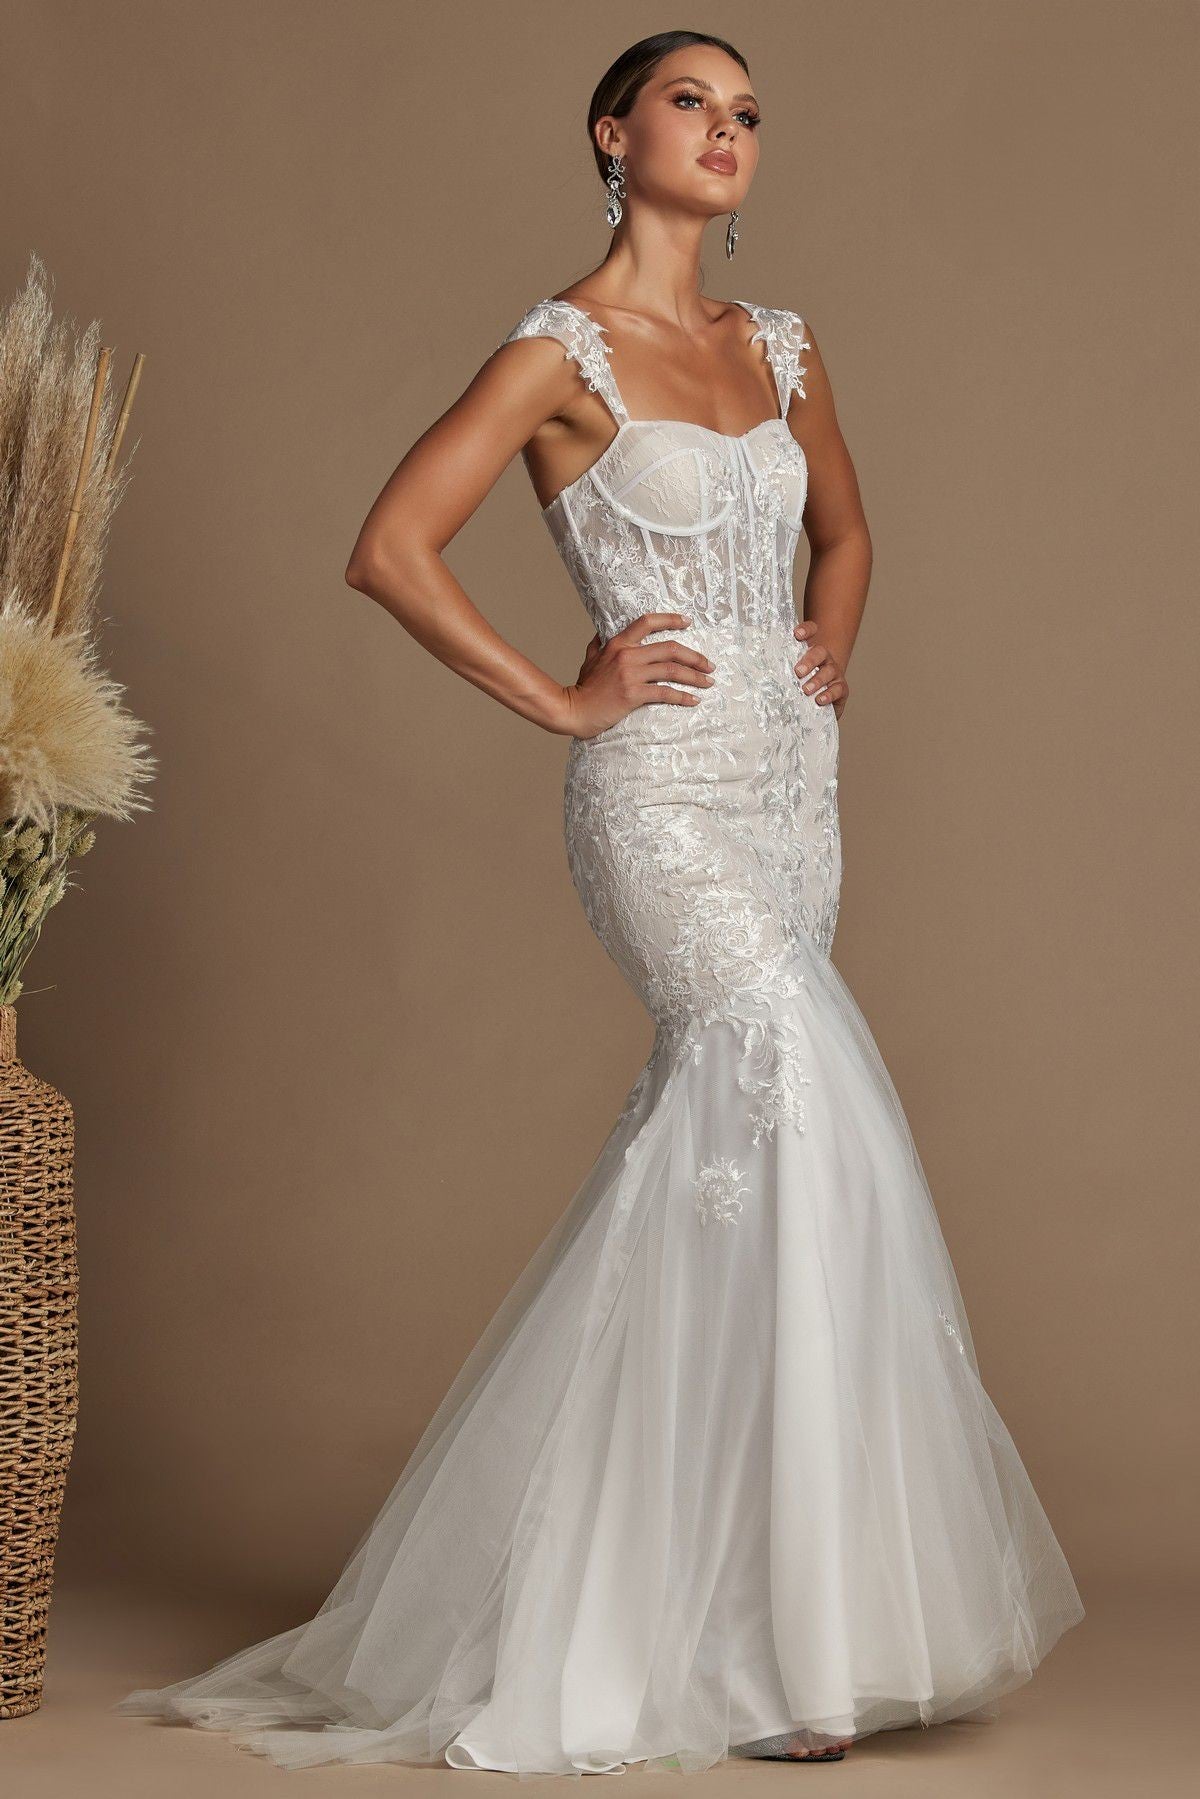 Sweetheart Off Shoulder Tulle Skirt Mermaid Long Wedding Dress NXJS924-Wedding Dress-smcfashion.com